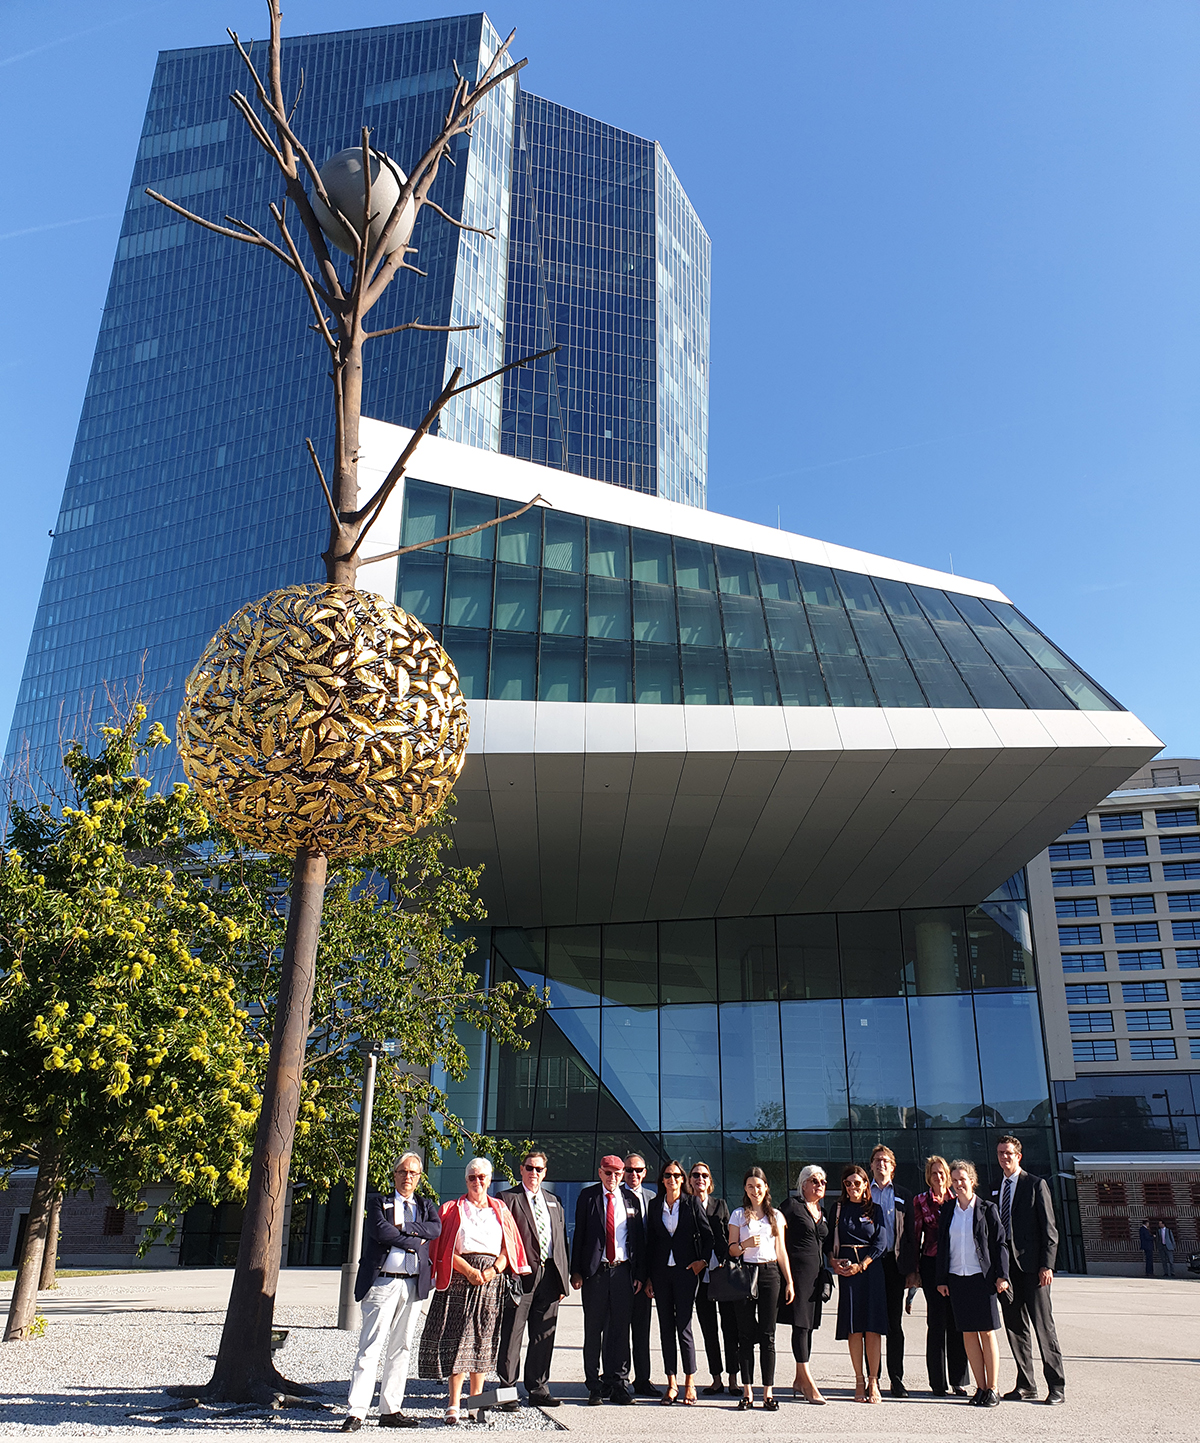 „Visit of the European Central Bank, Frankfurt am Main“